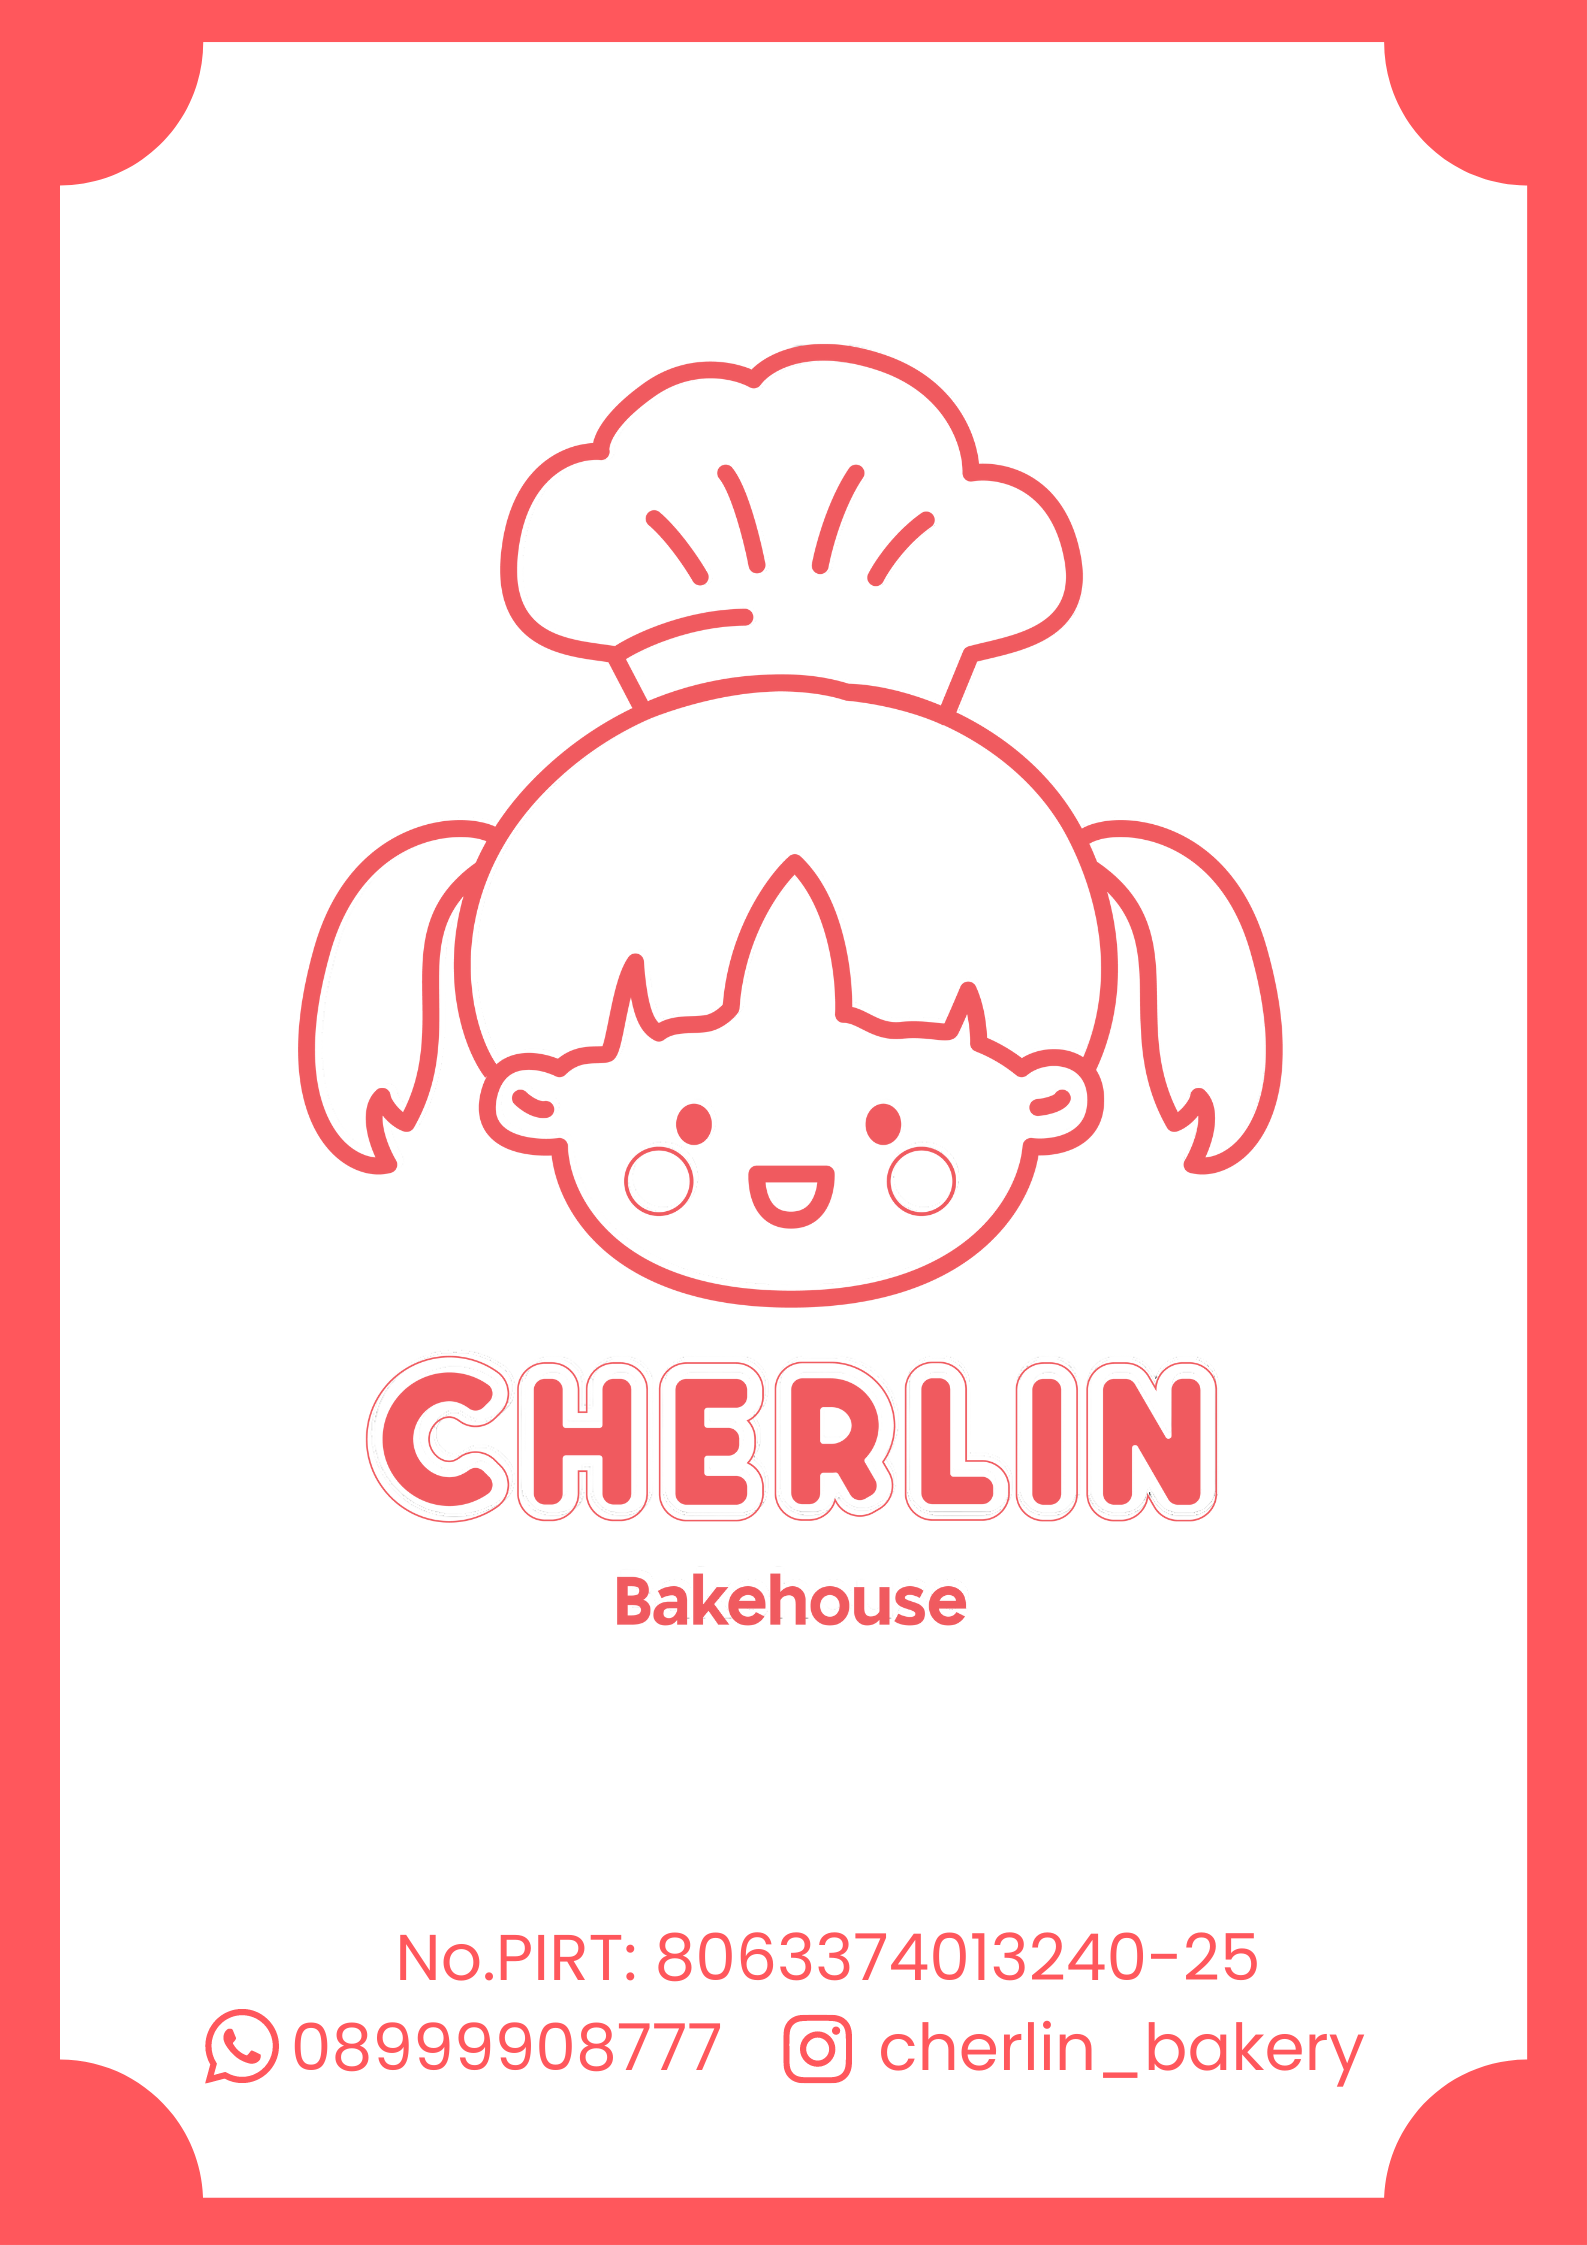 Cherlin_bakery